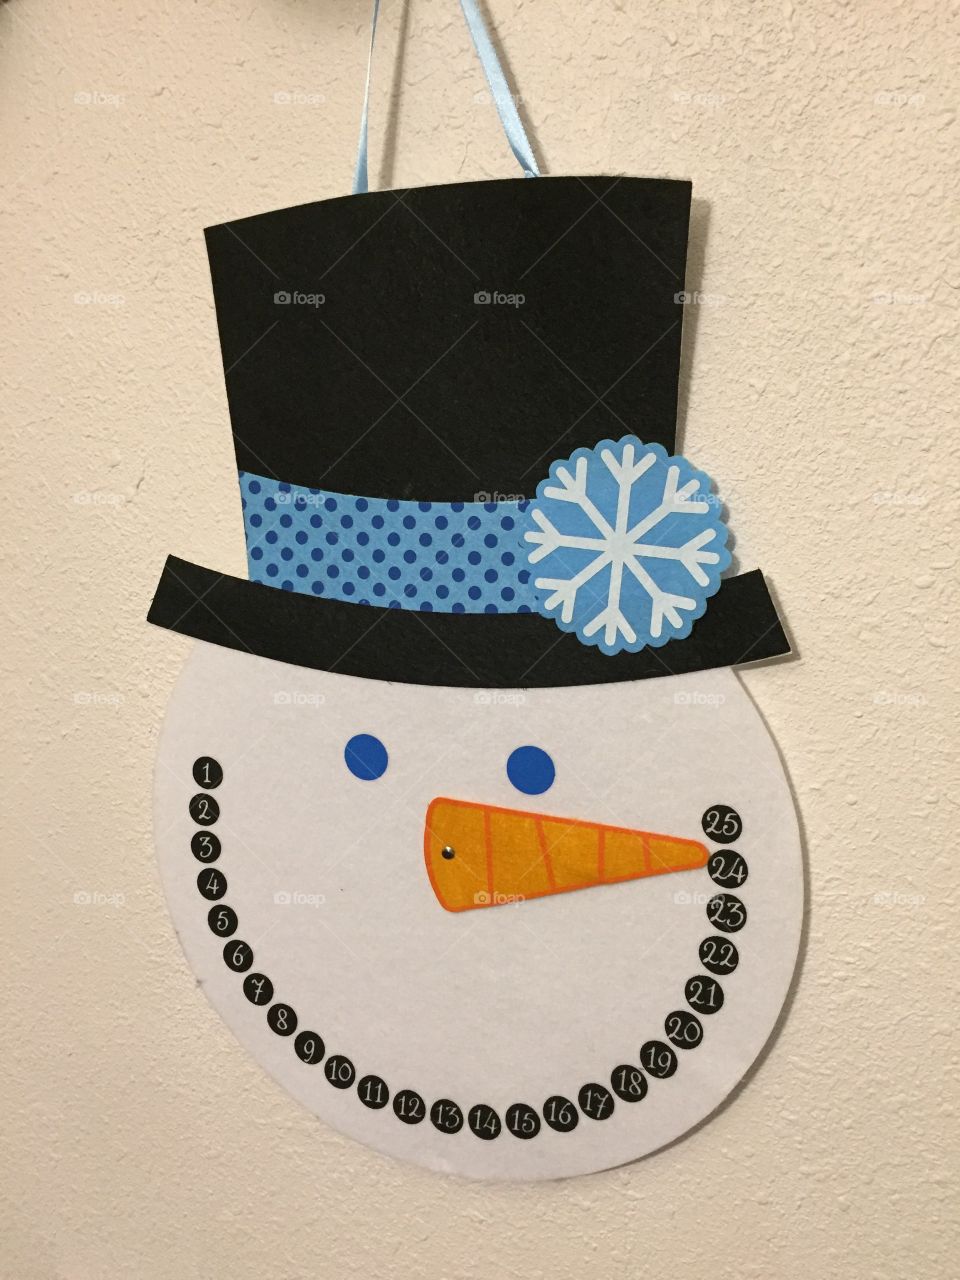 Snowman countdown to Christmas!!